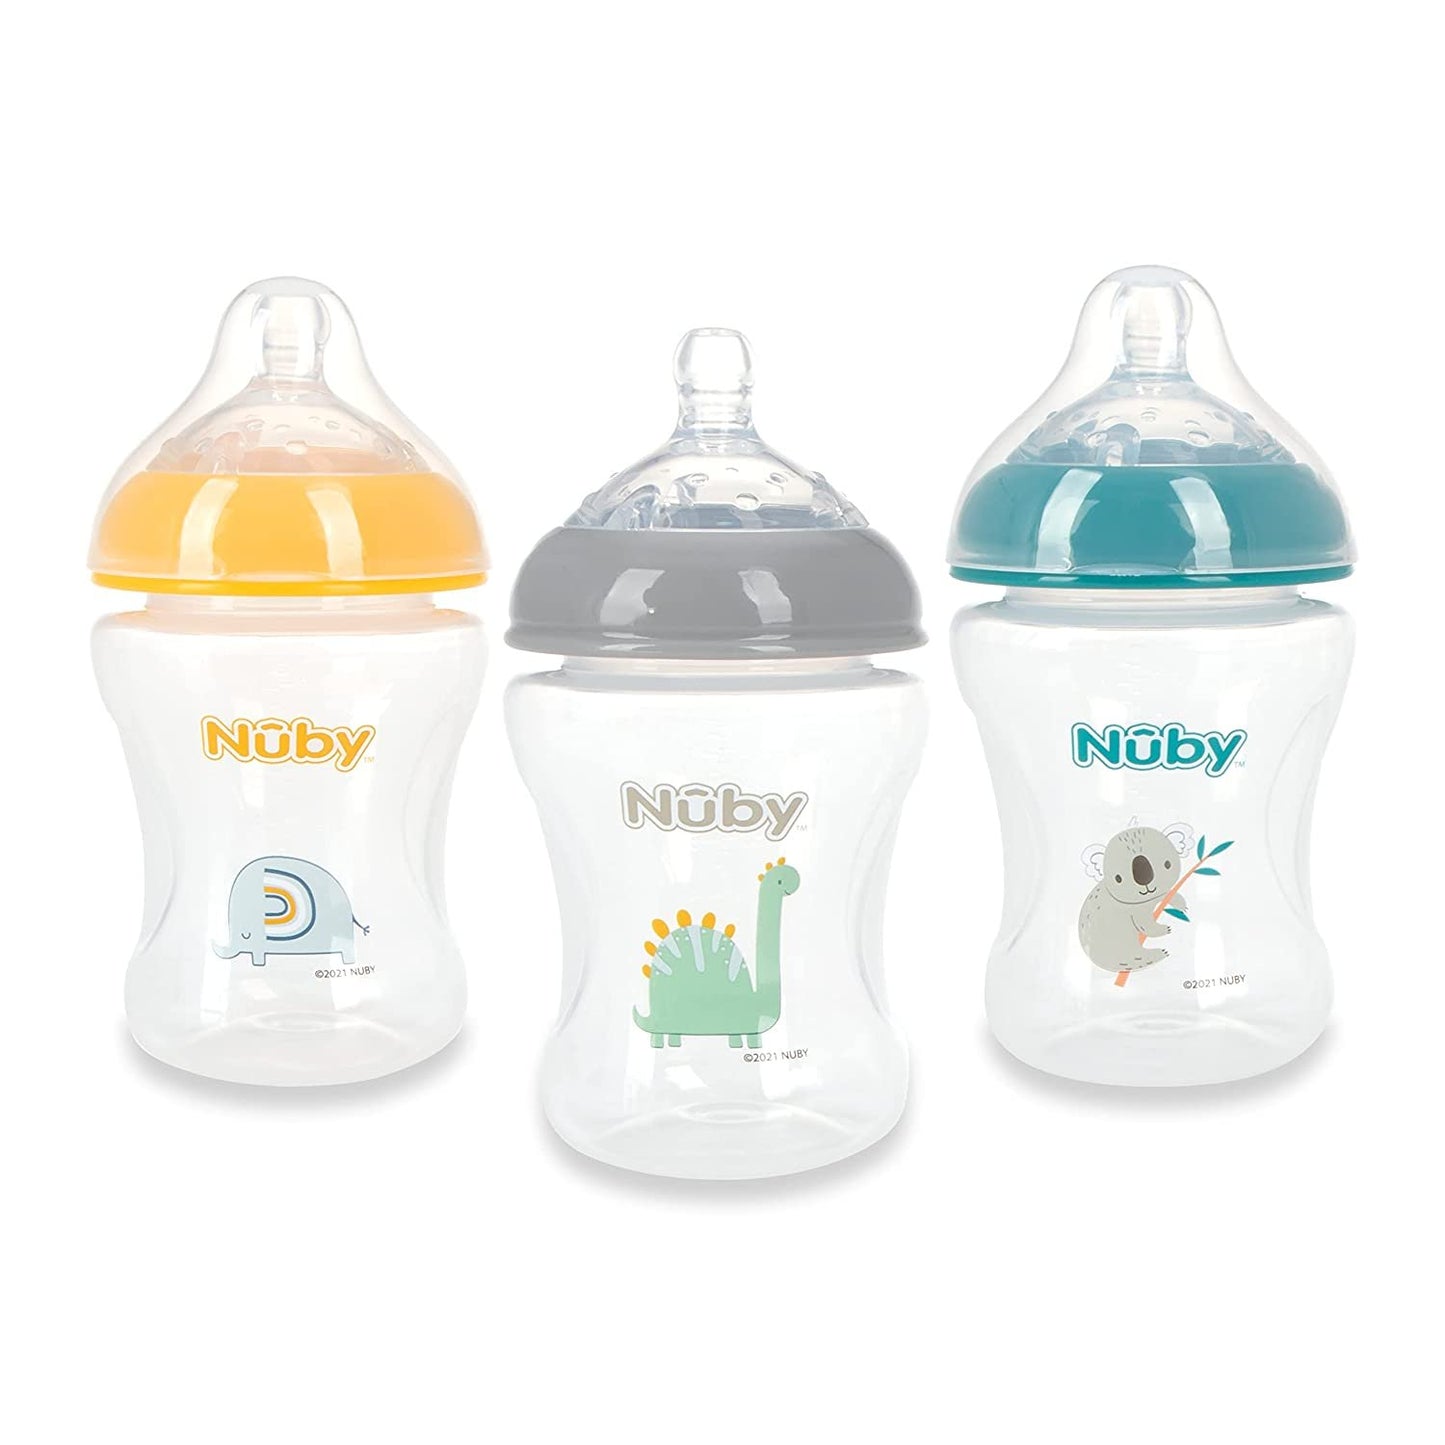 Nuby 3-Pack Infant Feeding Bottles with Slow Flow Breast Size Silicone Nipple: 0+ Months, 8oz, 3 Pack Set: Delicate Koala, Elephant, Dinosaur Prints